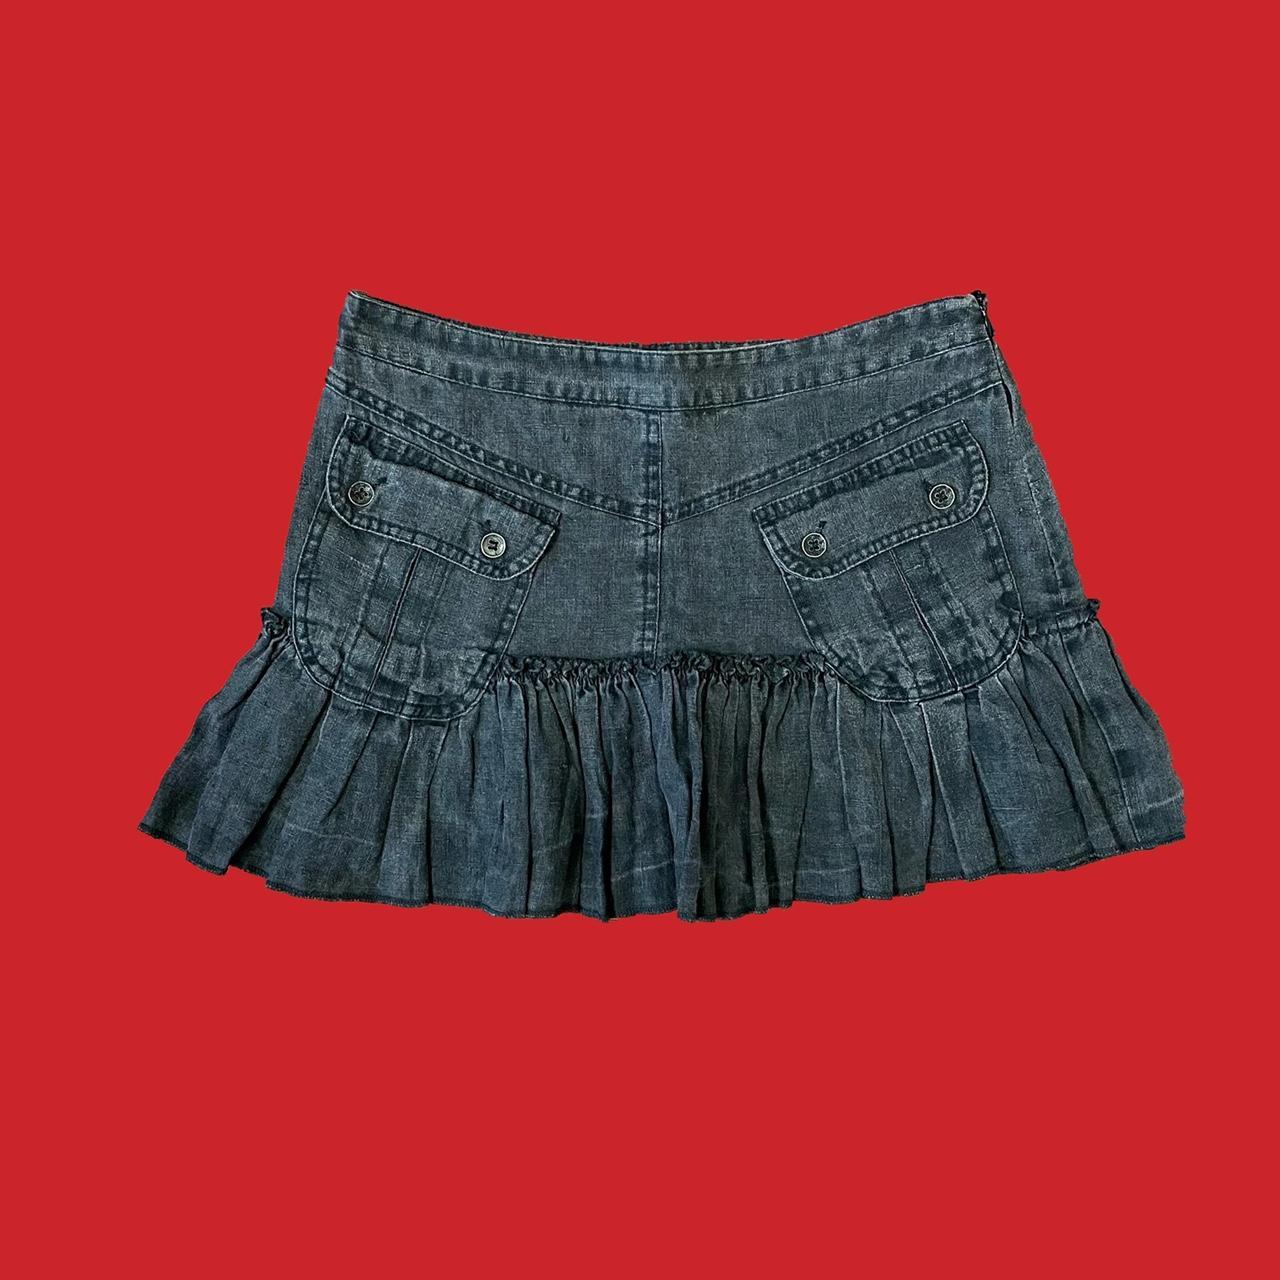 Vintage 2000s gray cargo pleated mini skirt by DZYN... - Depop